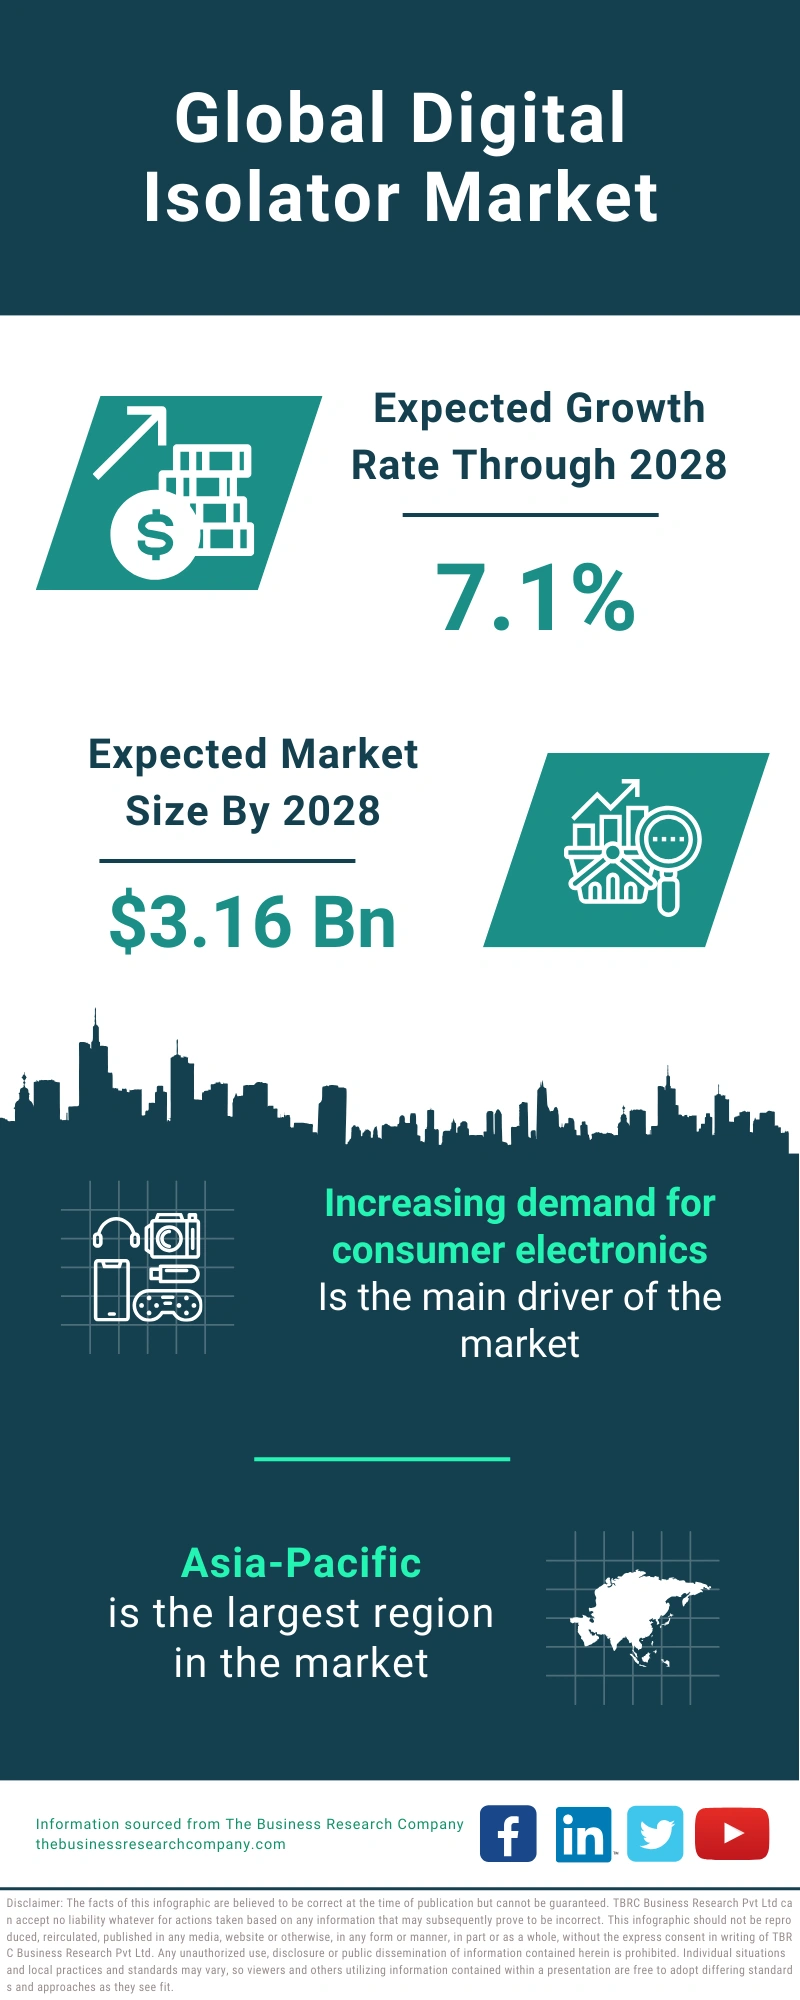 Digital Isolator Global Market Report 2024